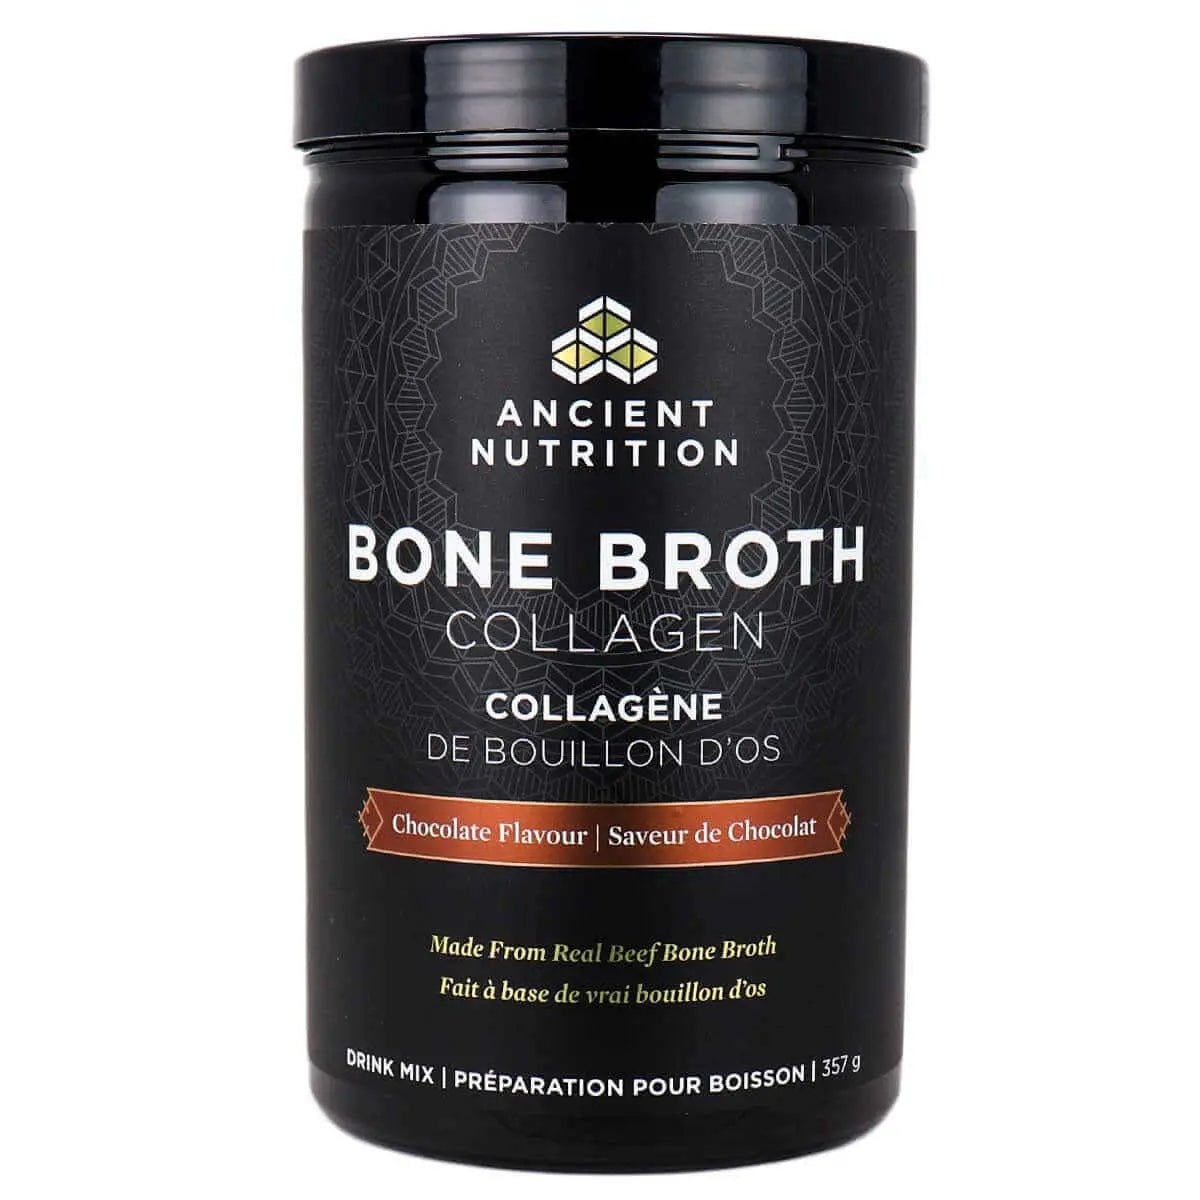 Ancient Nutrition Bone Broth Collagen 357g Powder - Chocolate Flavour - Nutrition Plus